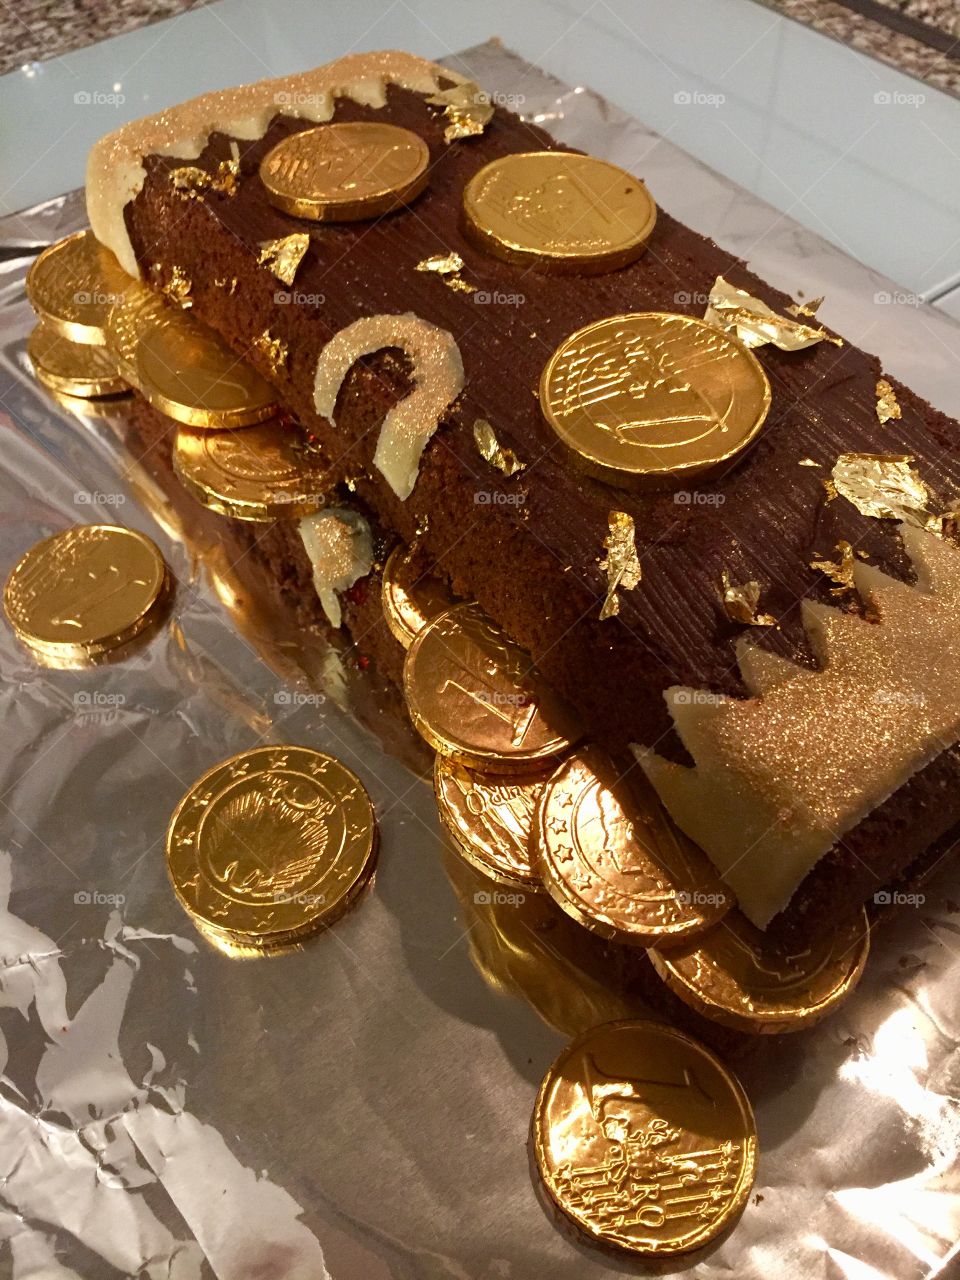 Chocolate Gold treasure chest 